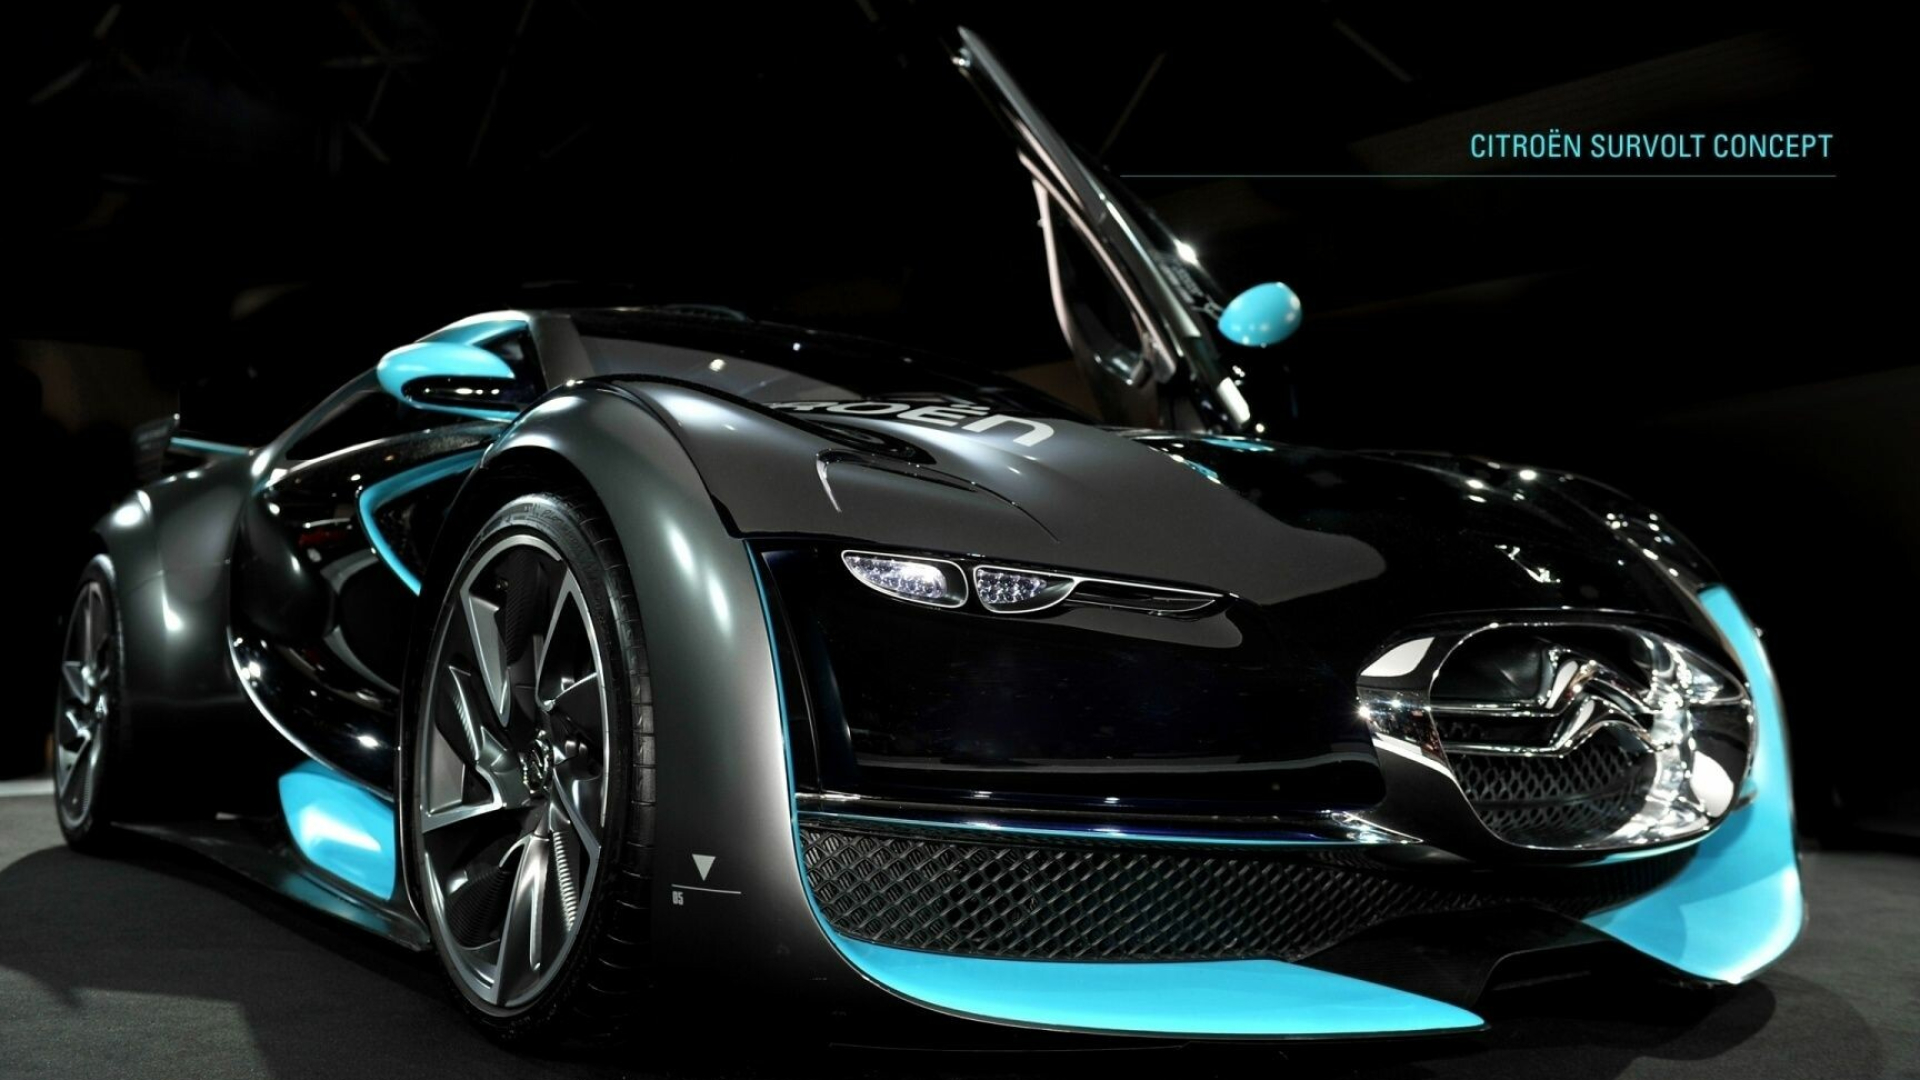 Citroen: Survolt concept, Based on the electric concept car Revolte. 1920x1080 Full HD Background.